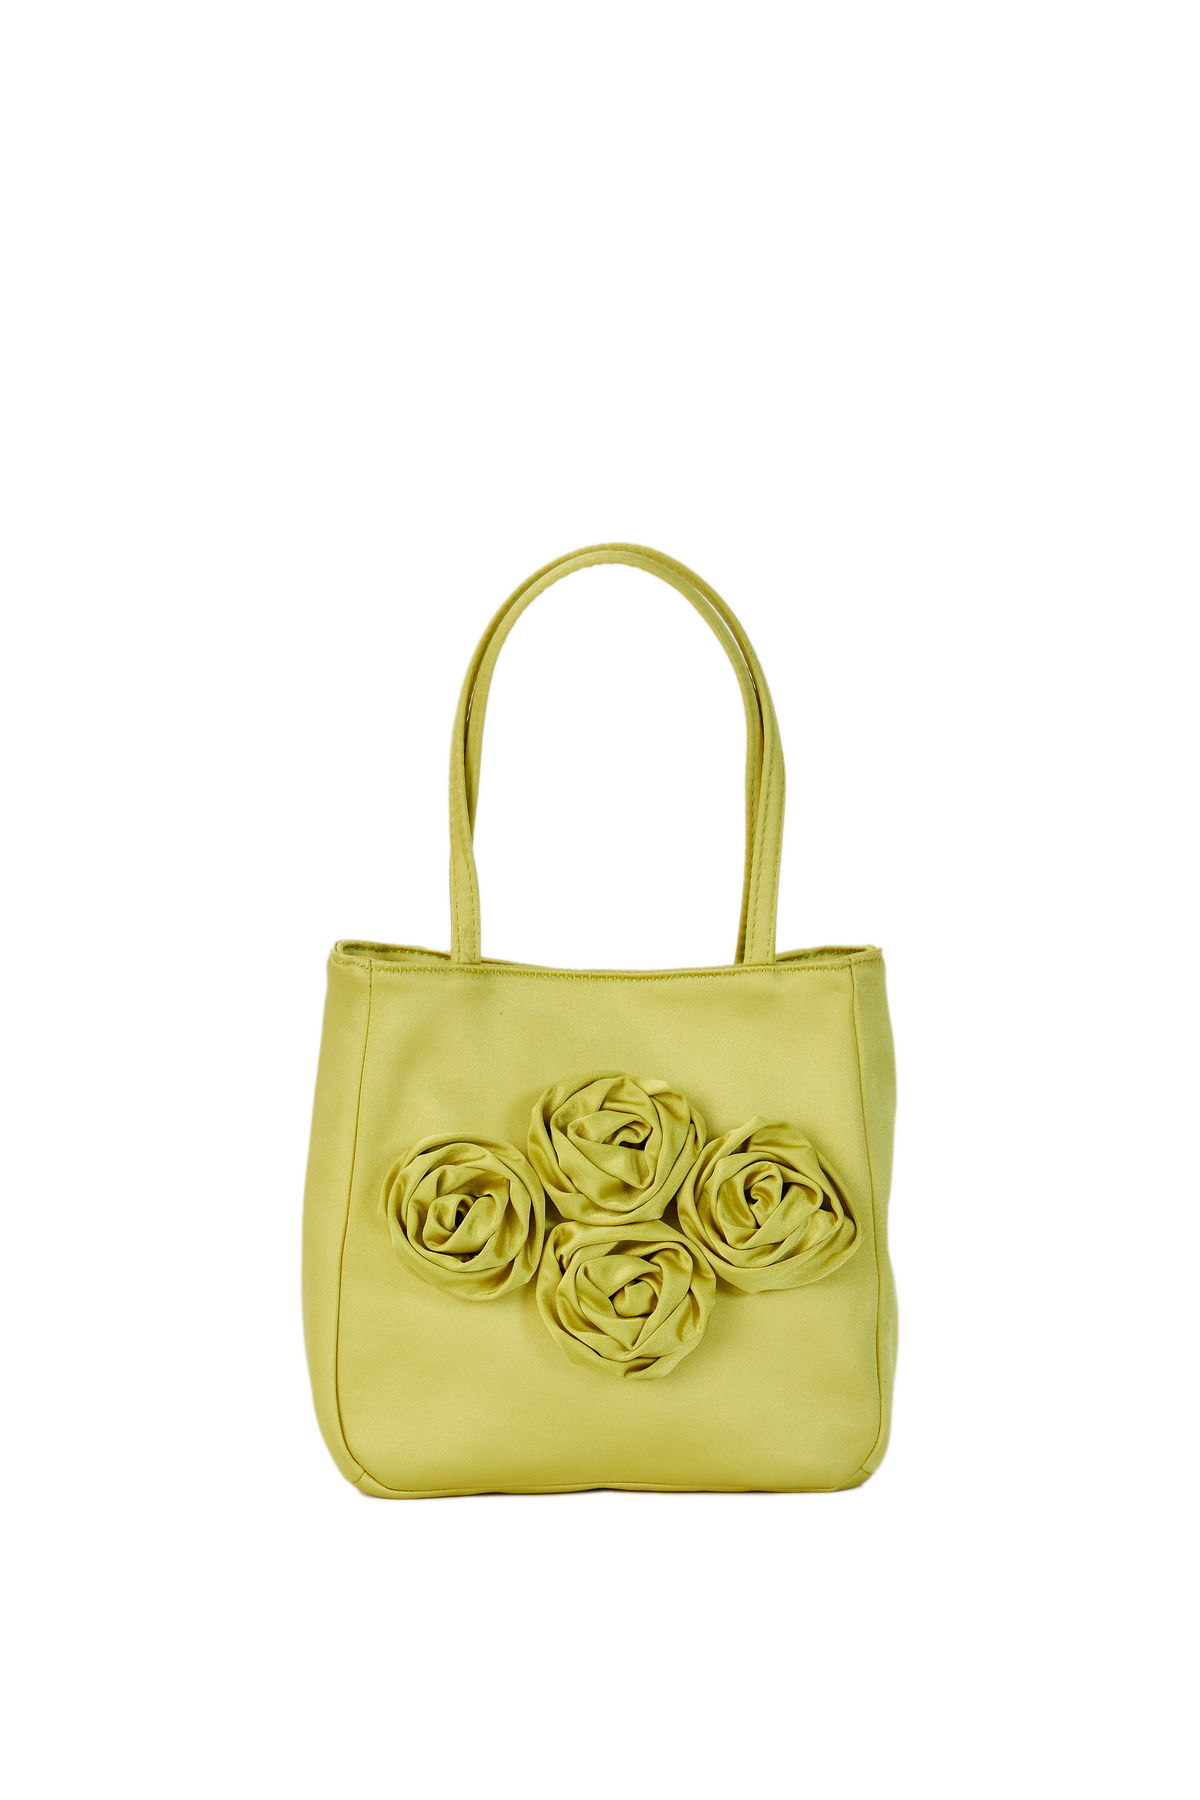 Floral Handbag - Lime Green